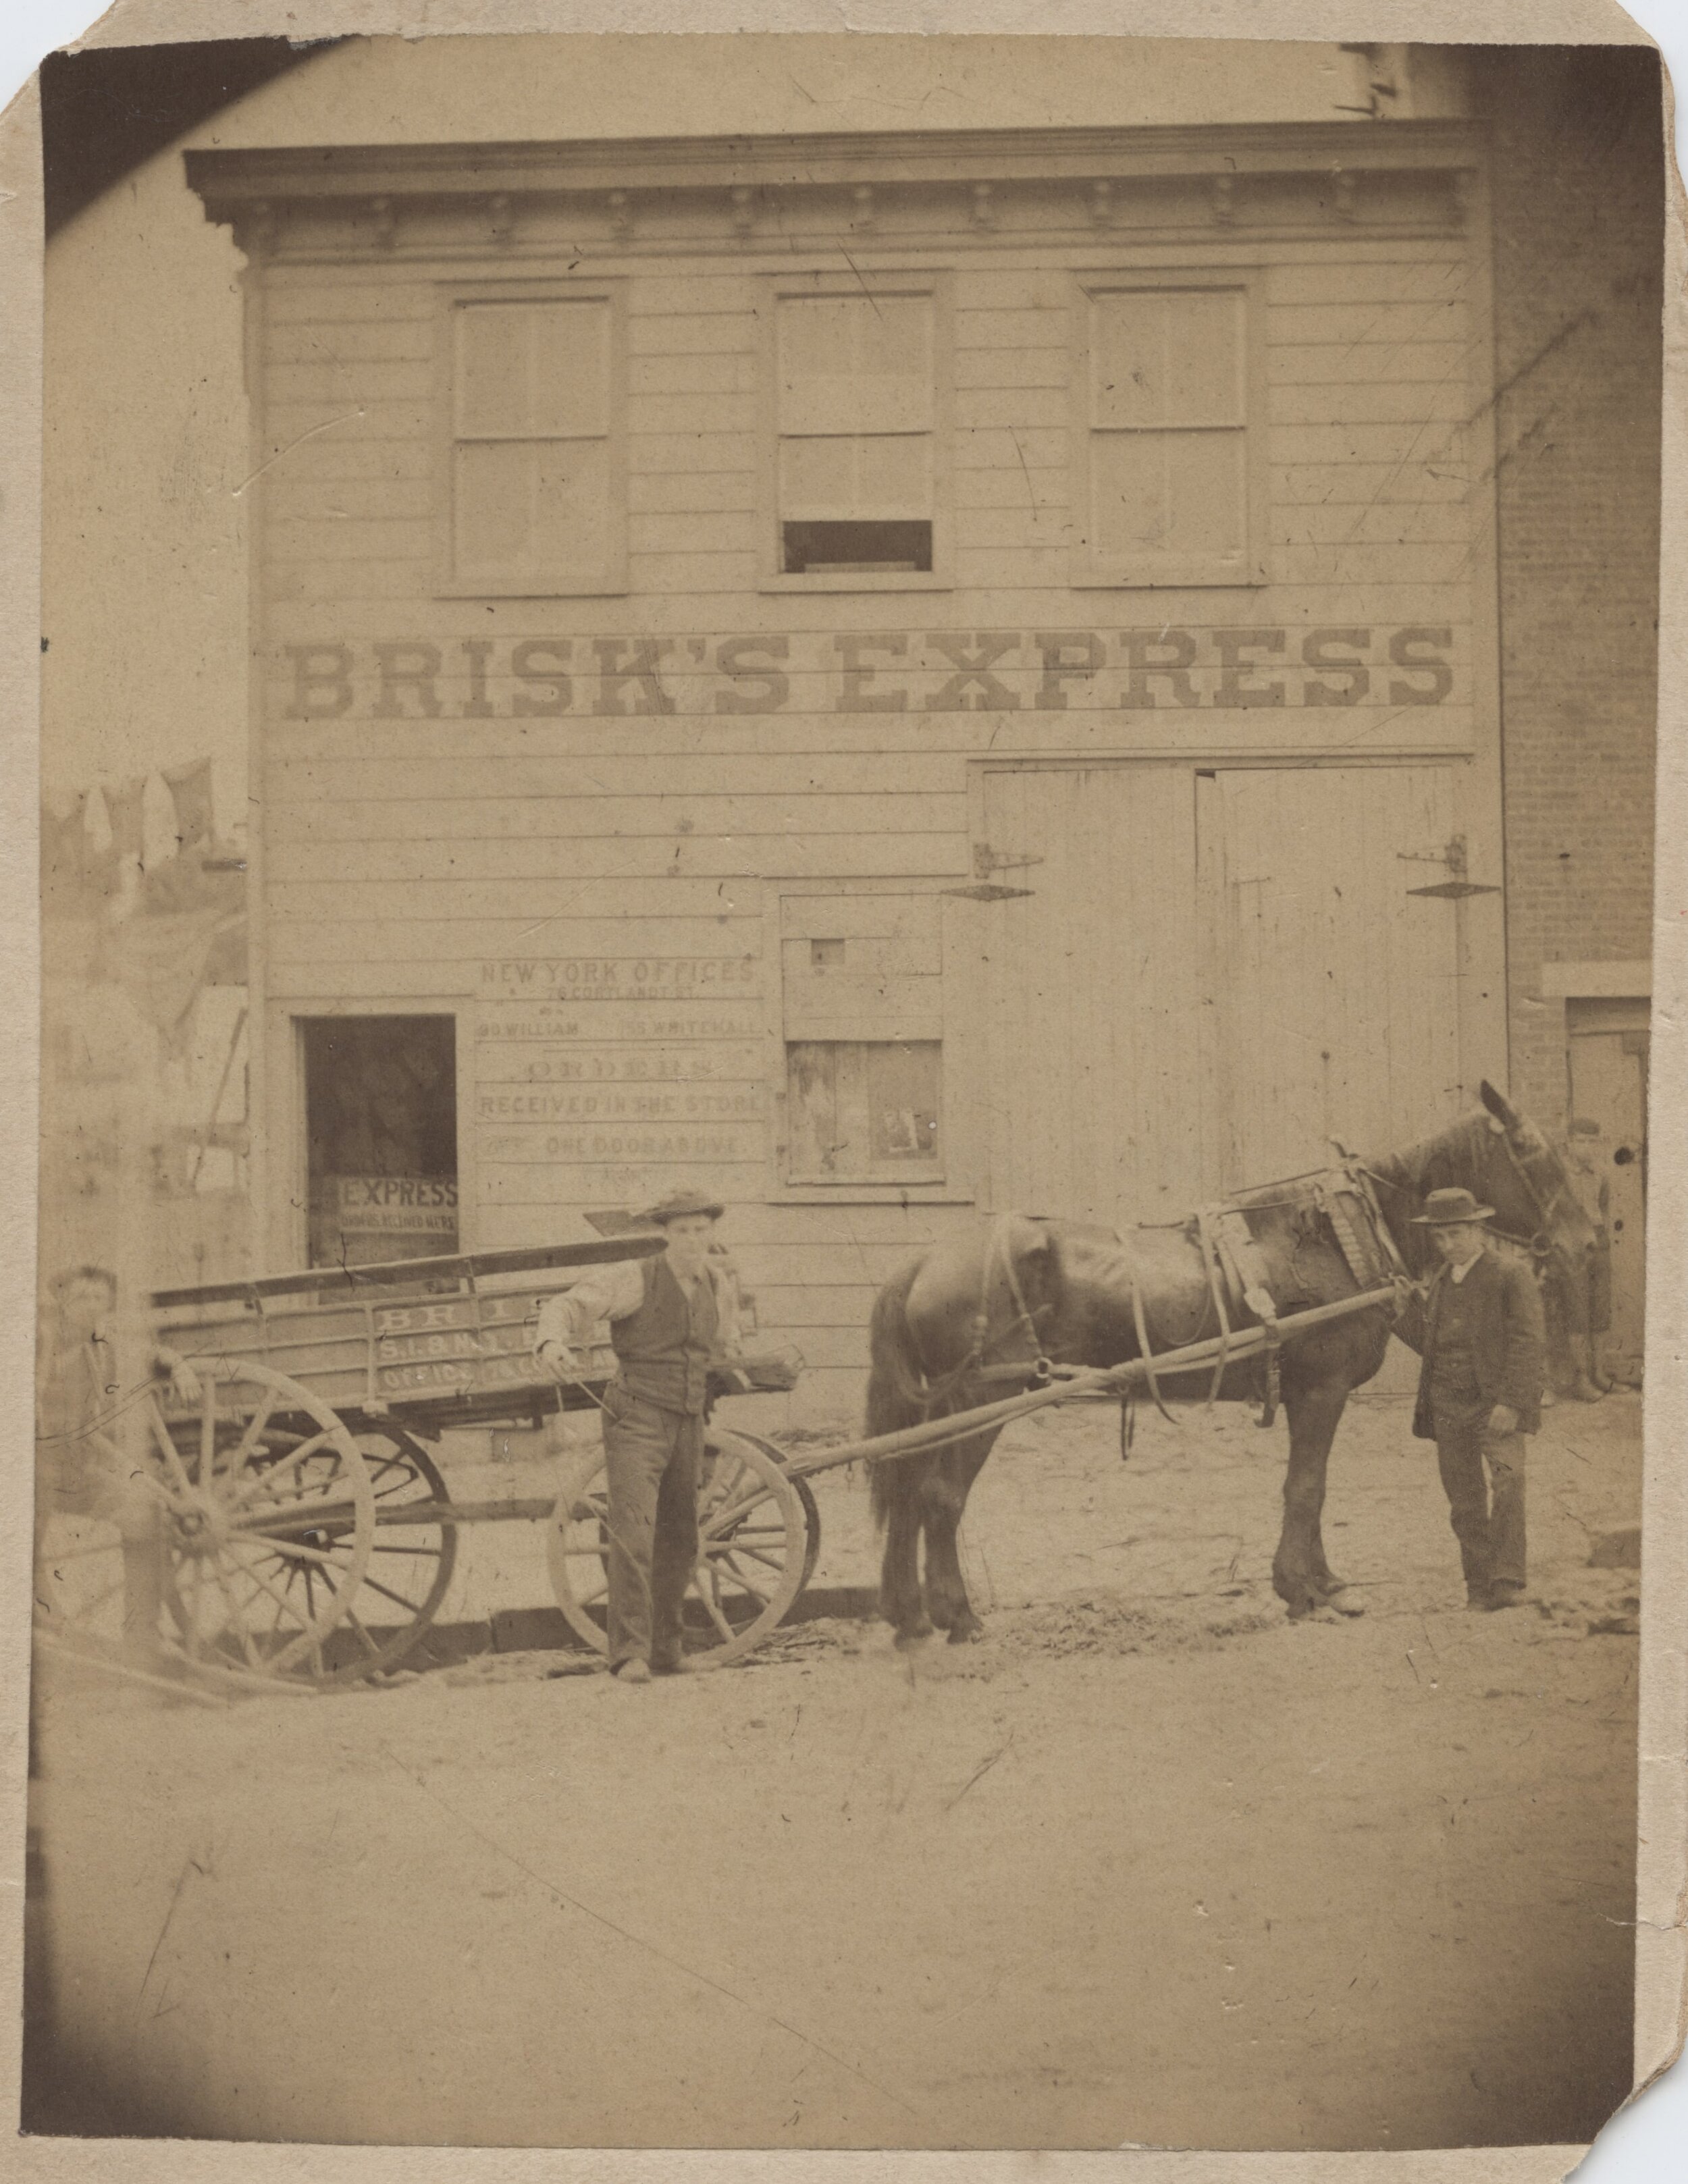 Brisk’s Express, Broad Street, Stapleton, ca. 1885-1895 (Copy)